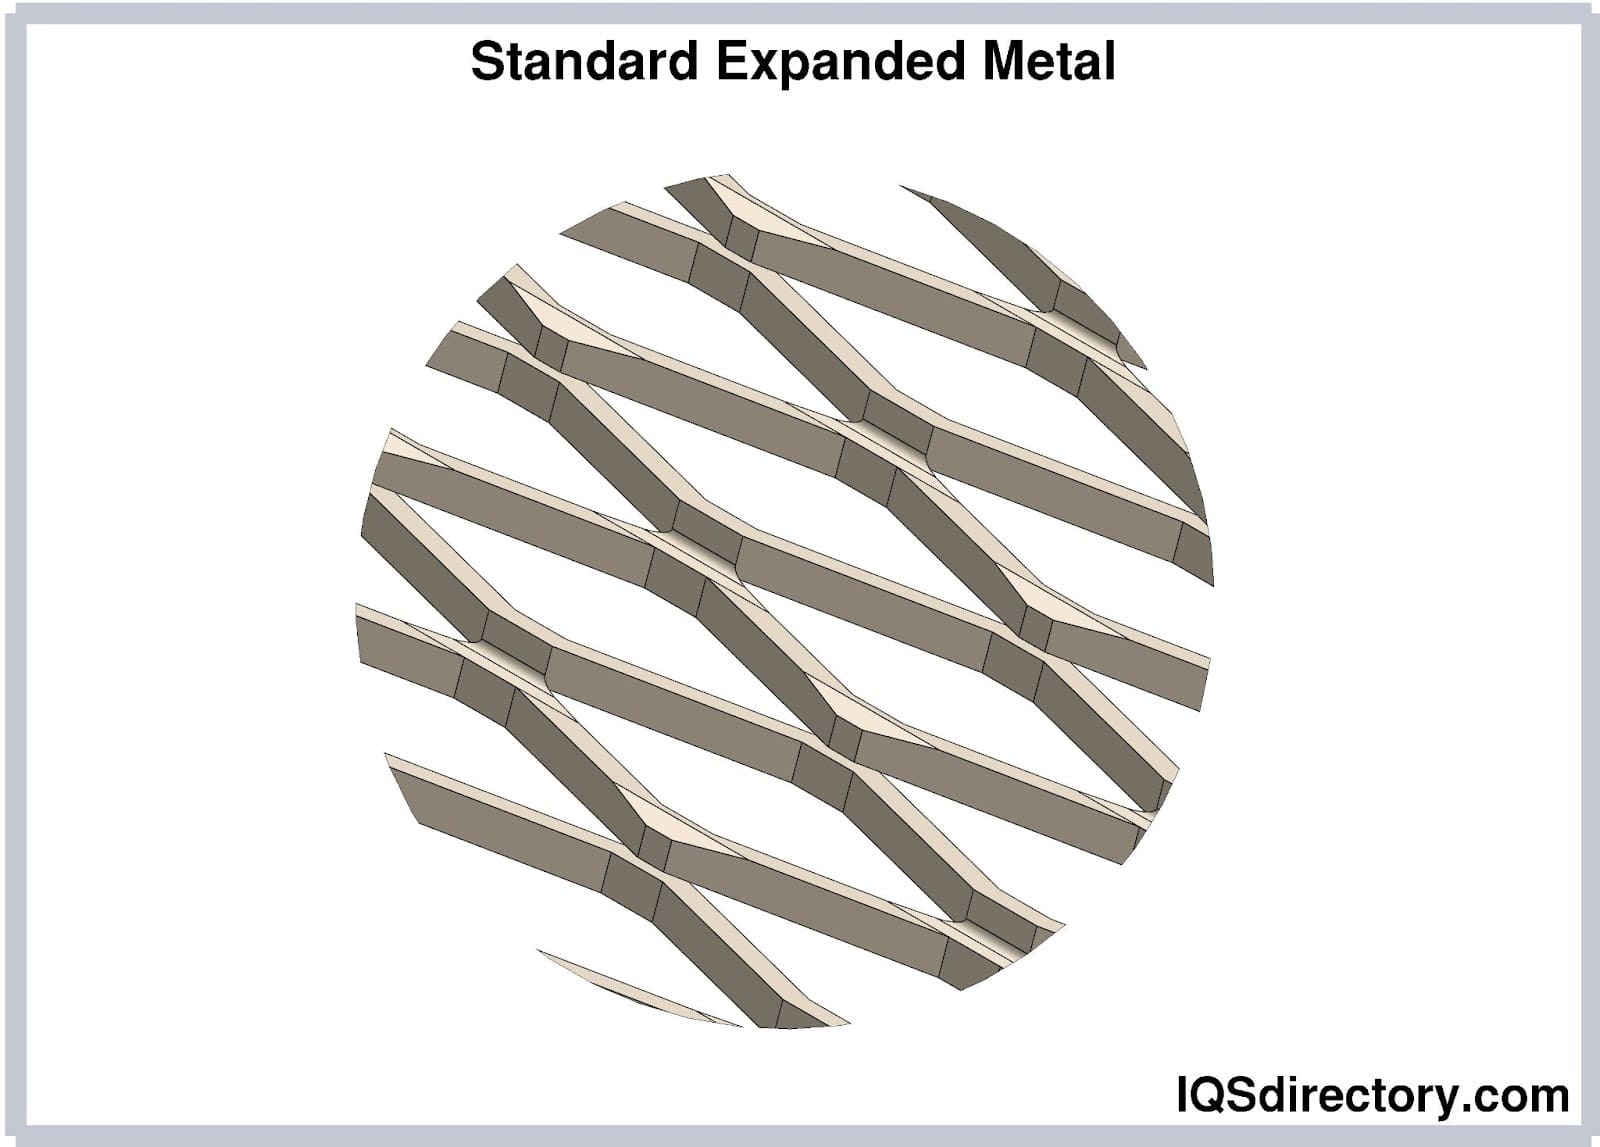 Standard Expanded Metal